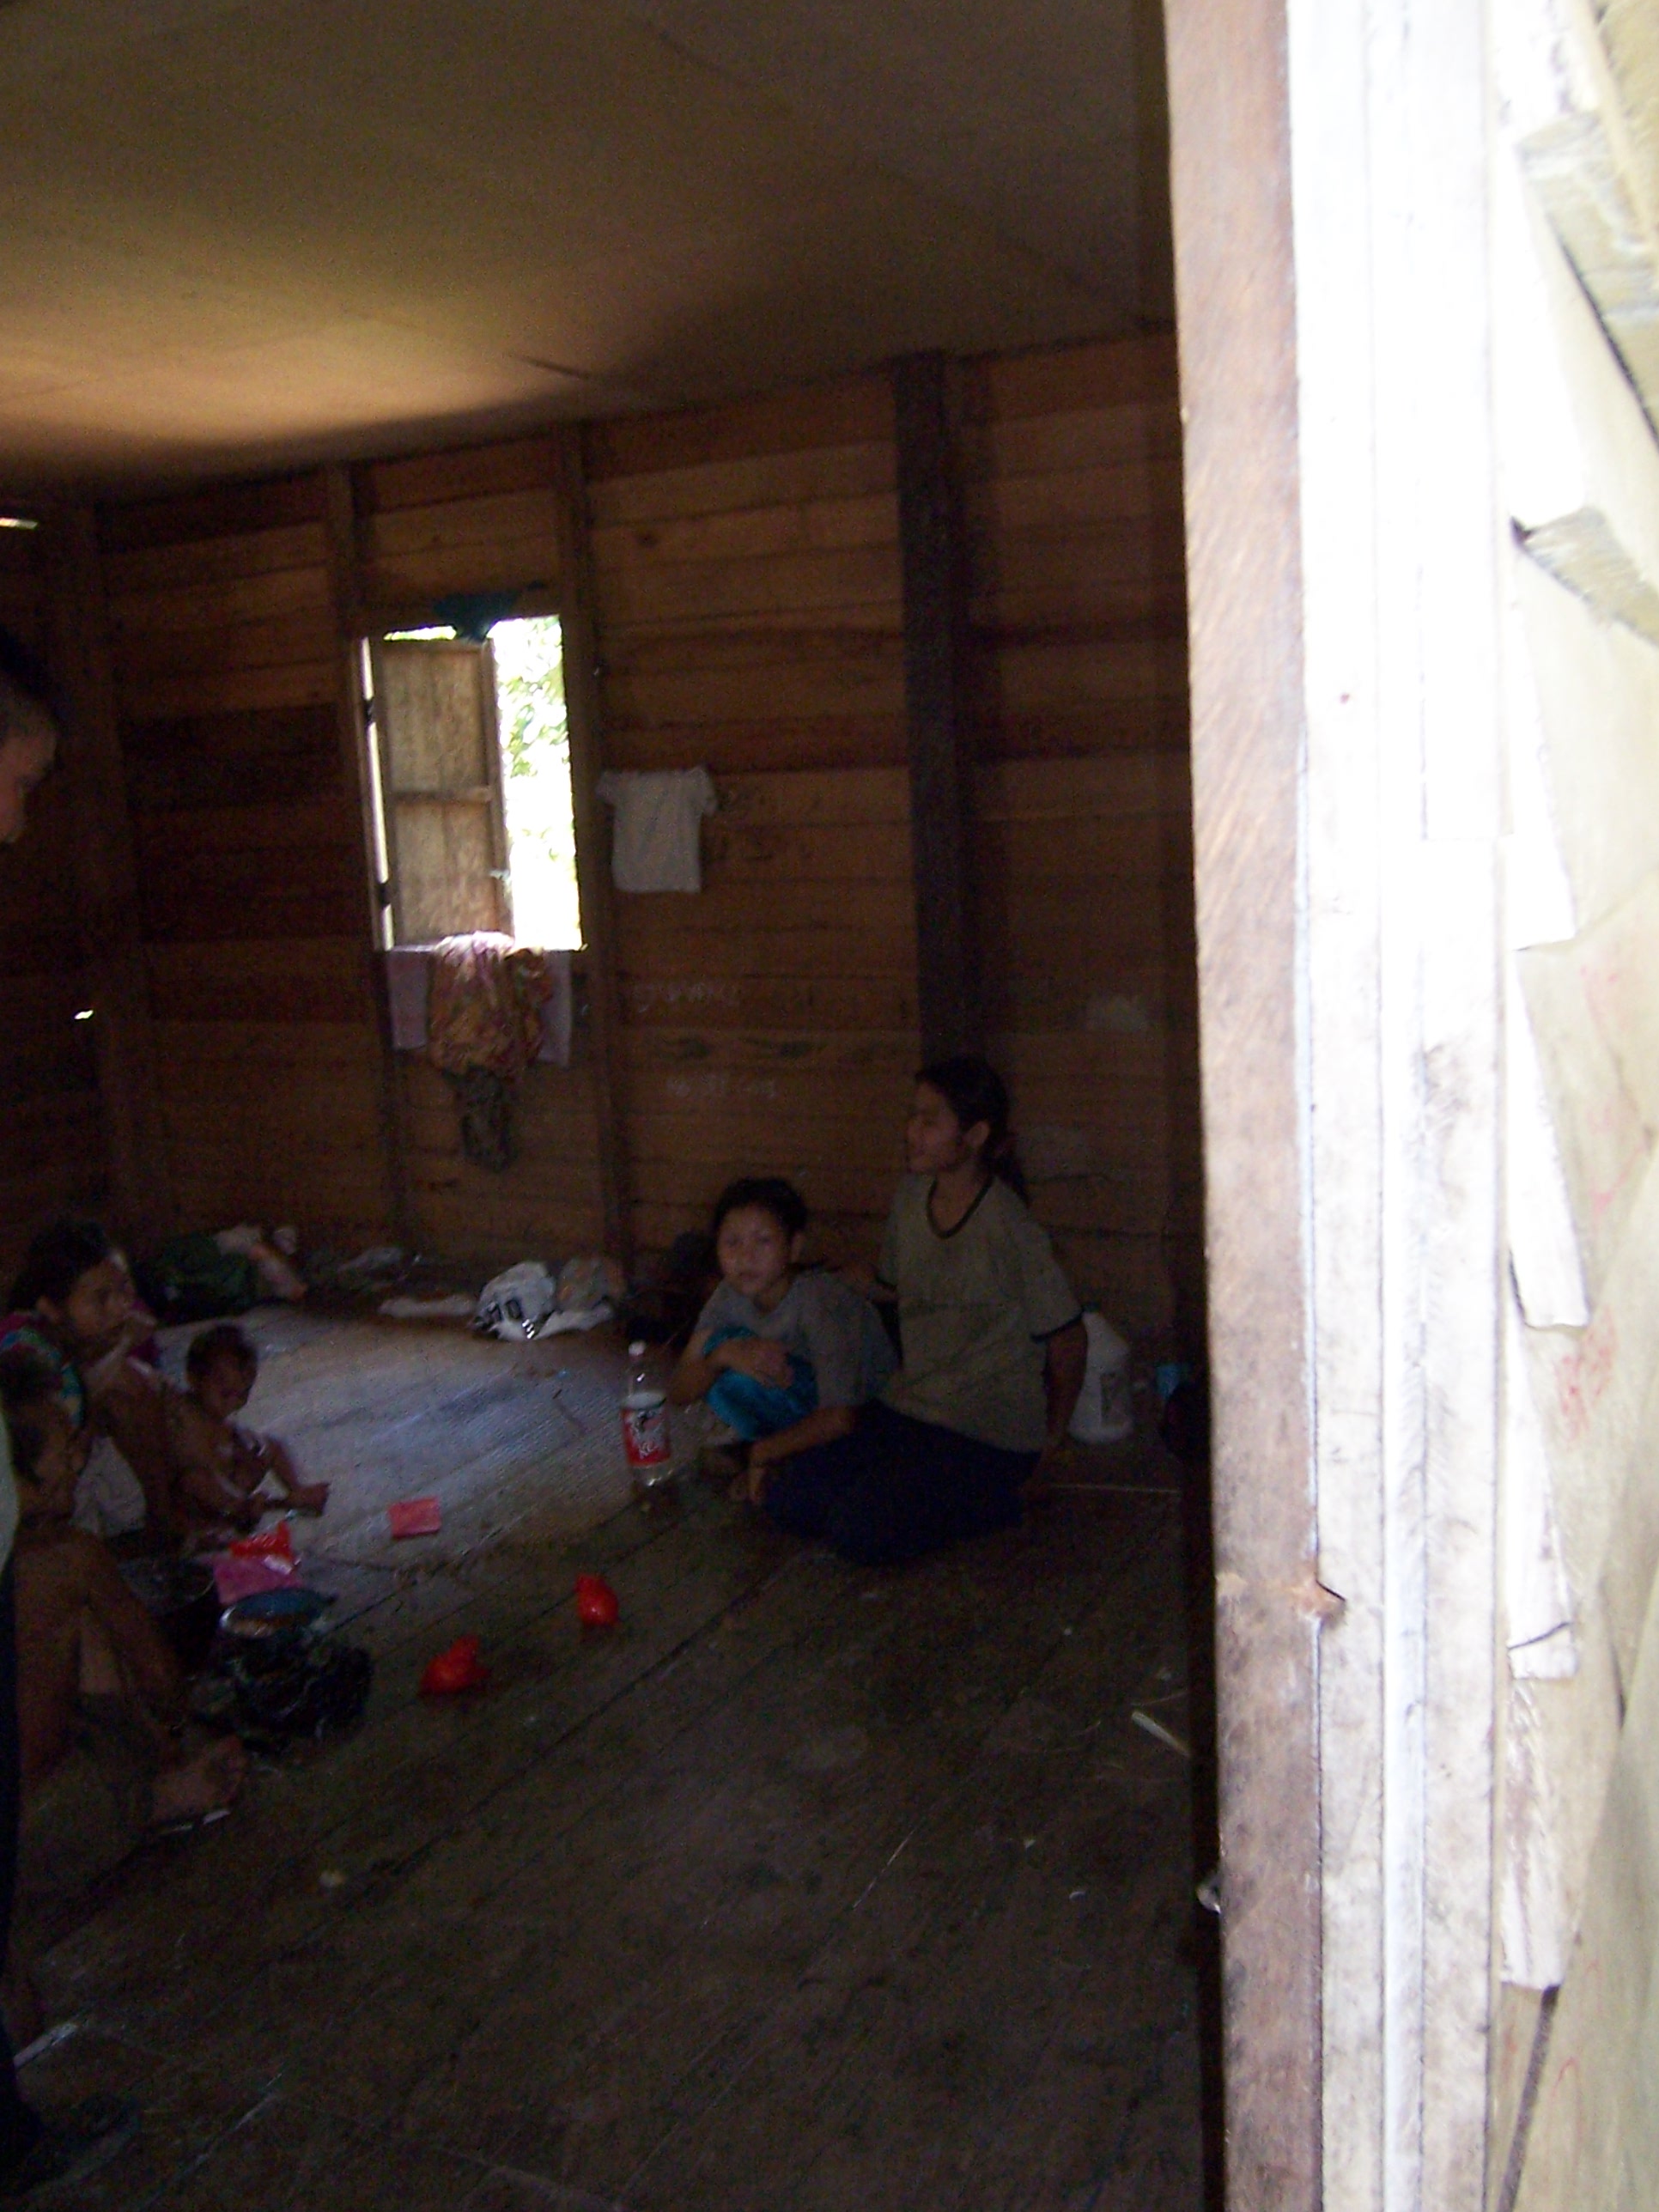 We met Lujan Sayat here in this dark Rumah Sakai, a half way house for Penan during their visit to the clinic